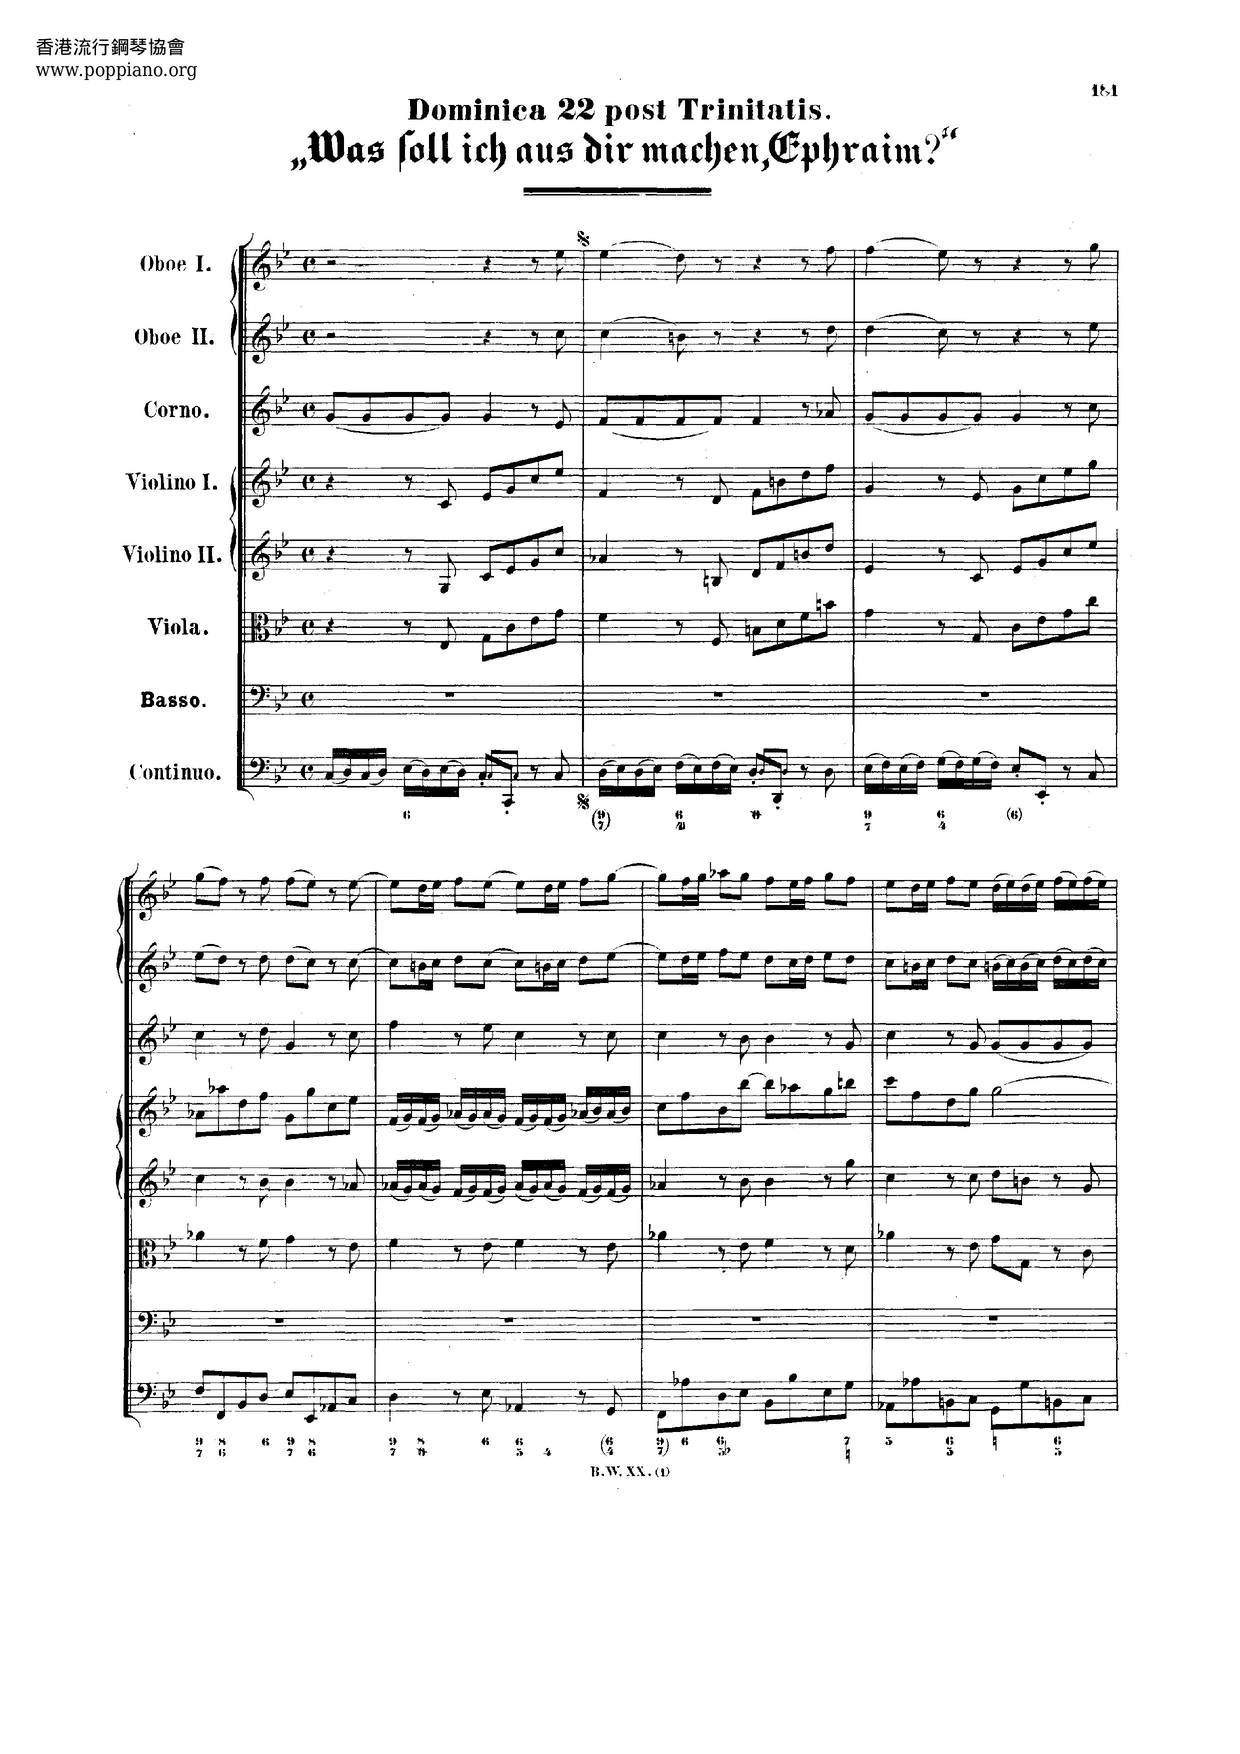 What Shall I Make Of You, Ephraim, BWV 89 Score